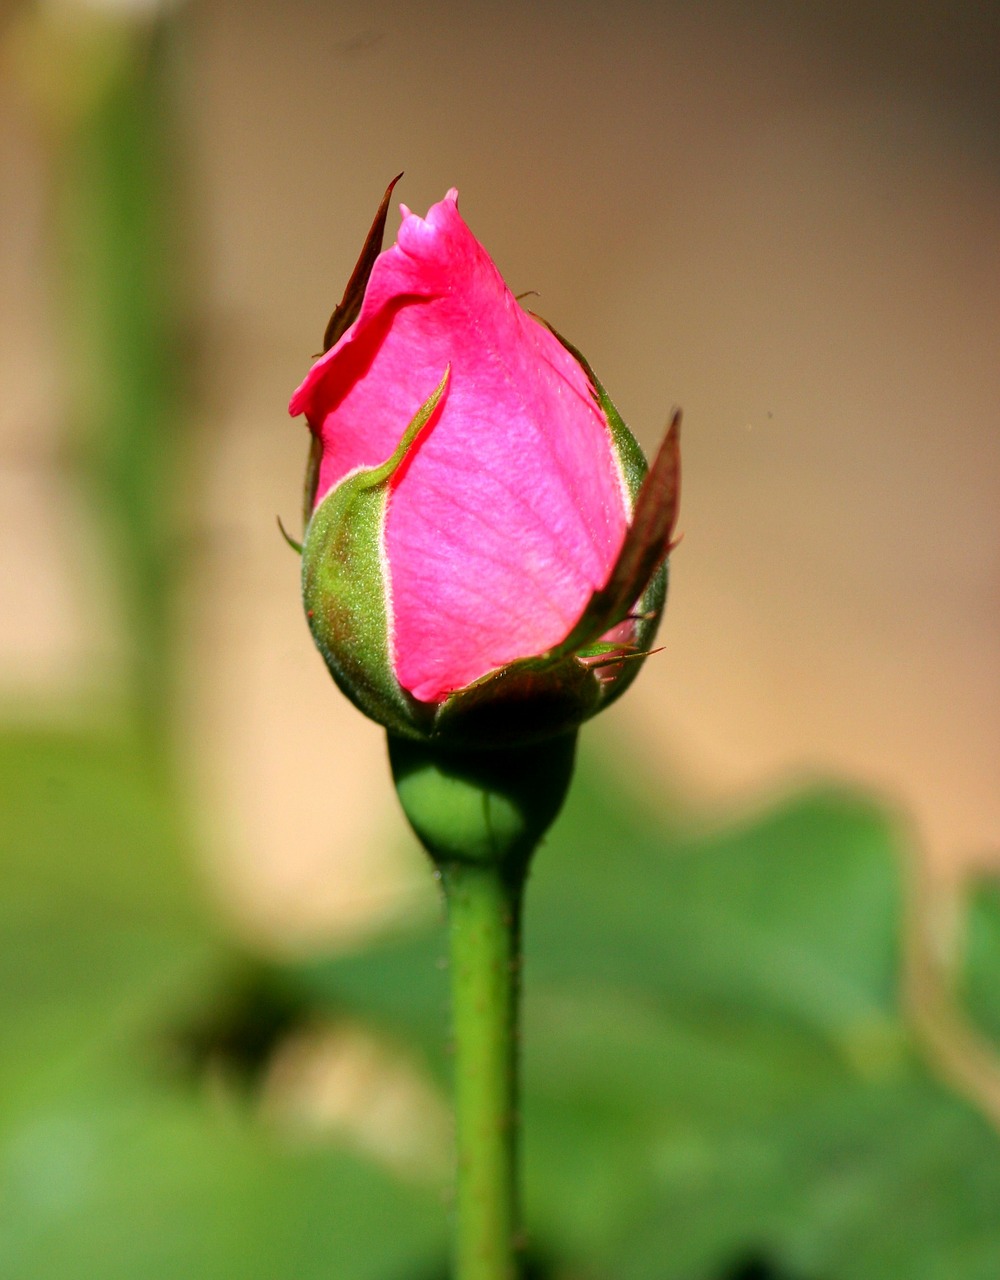 Rosebud,flower,blossom,rose,petal - free image from needpix.com